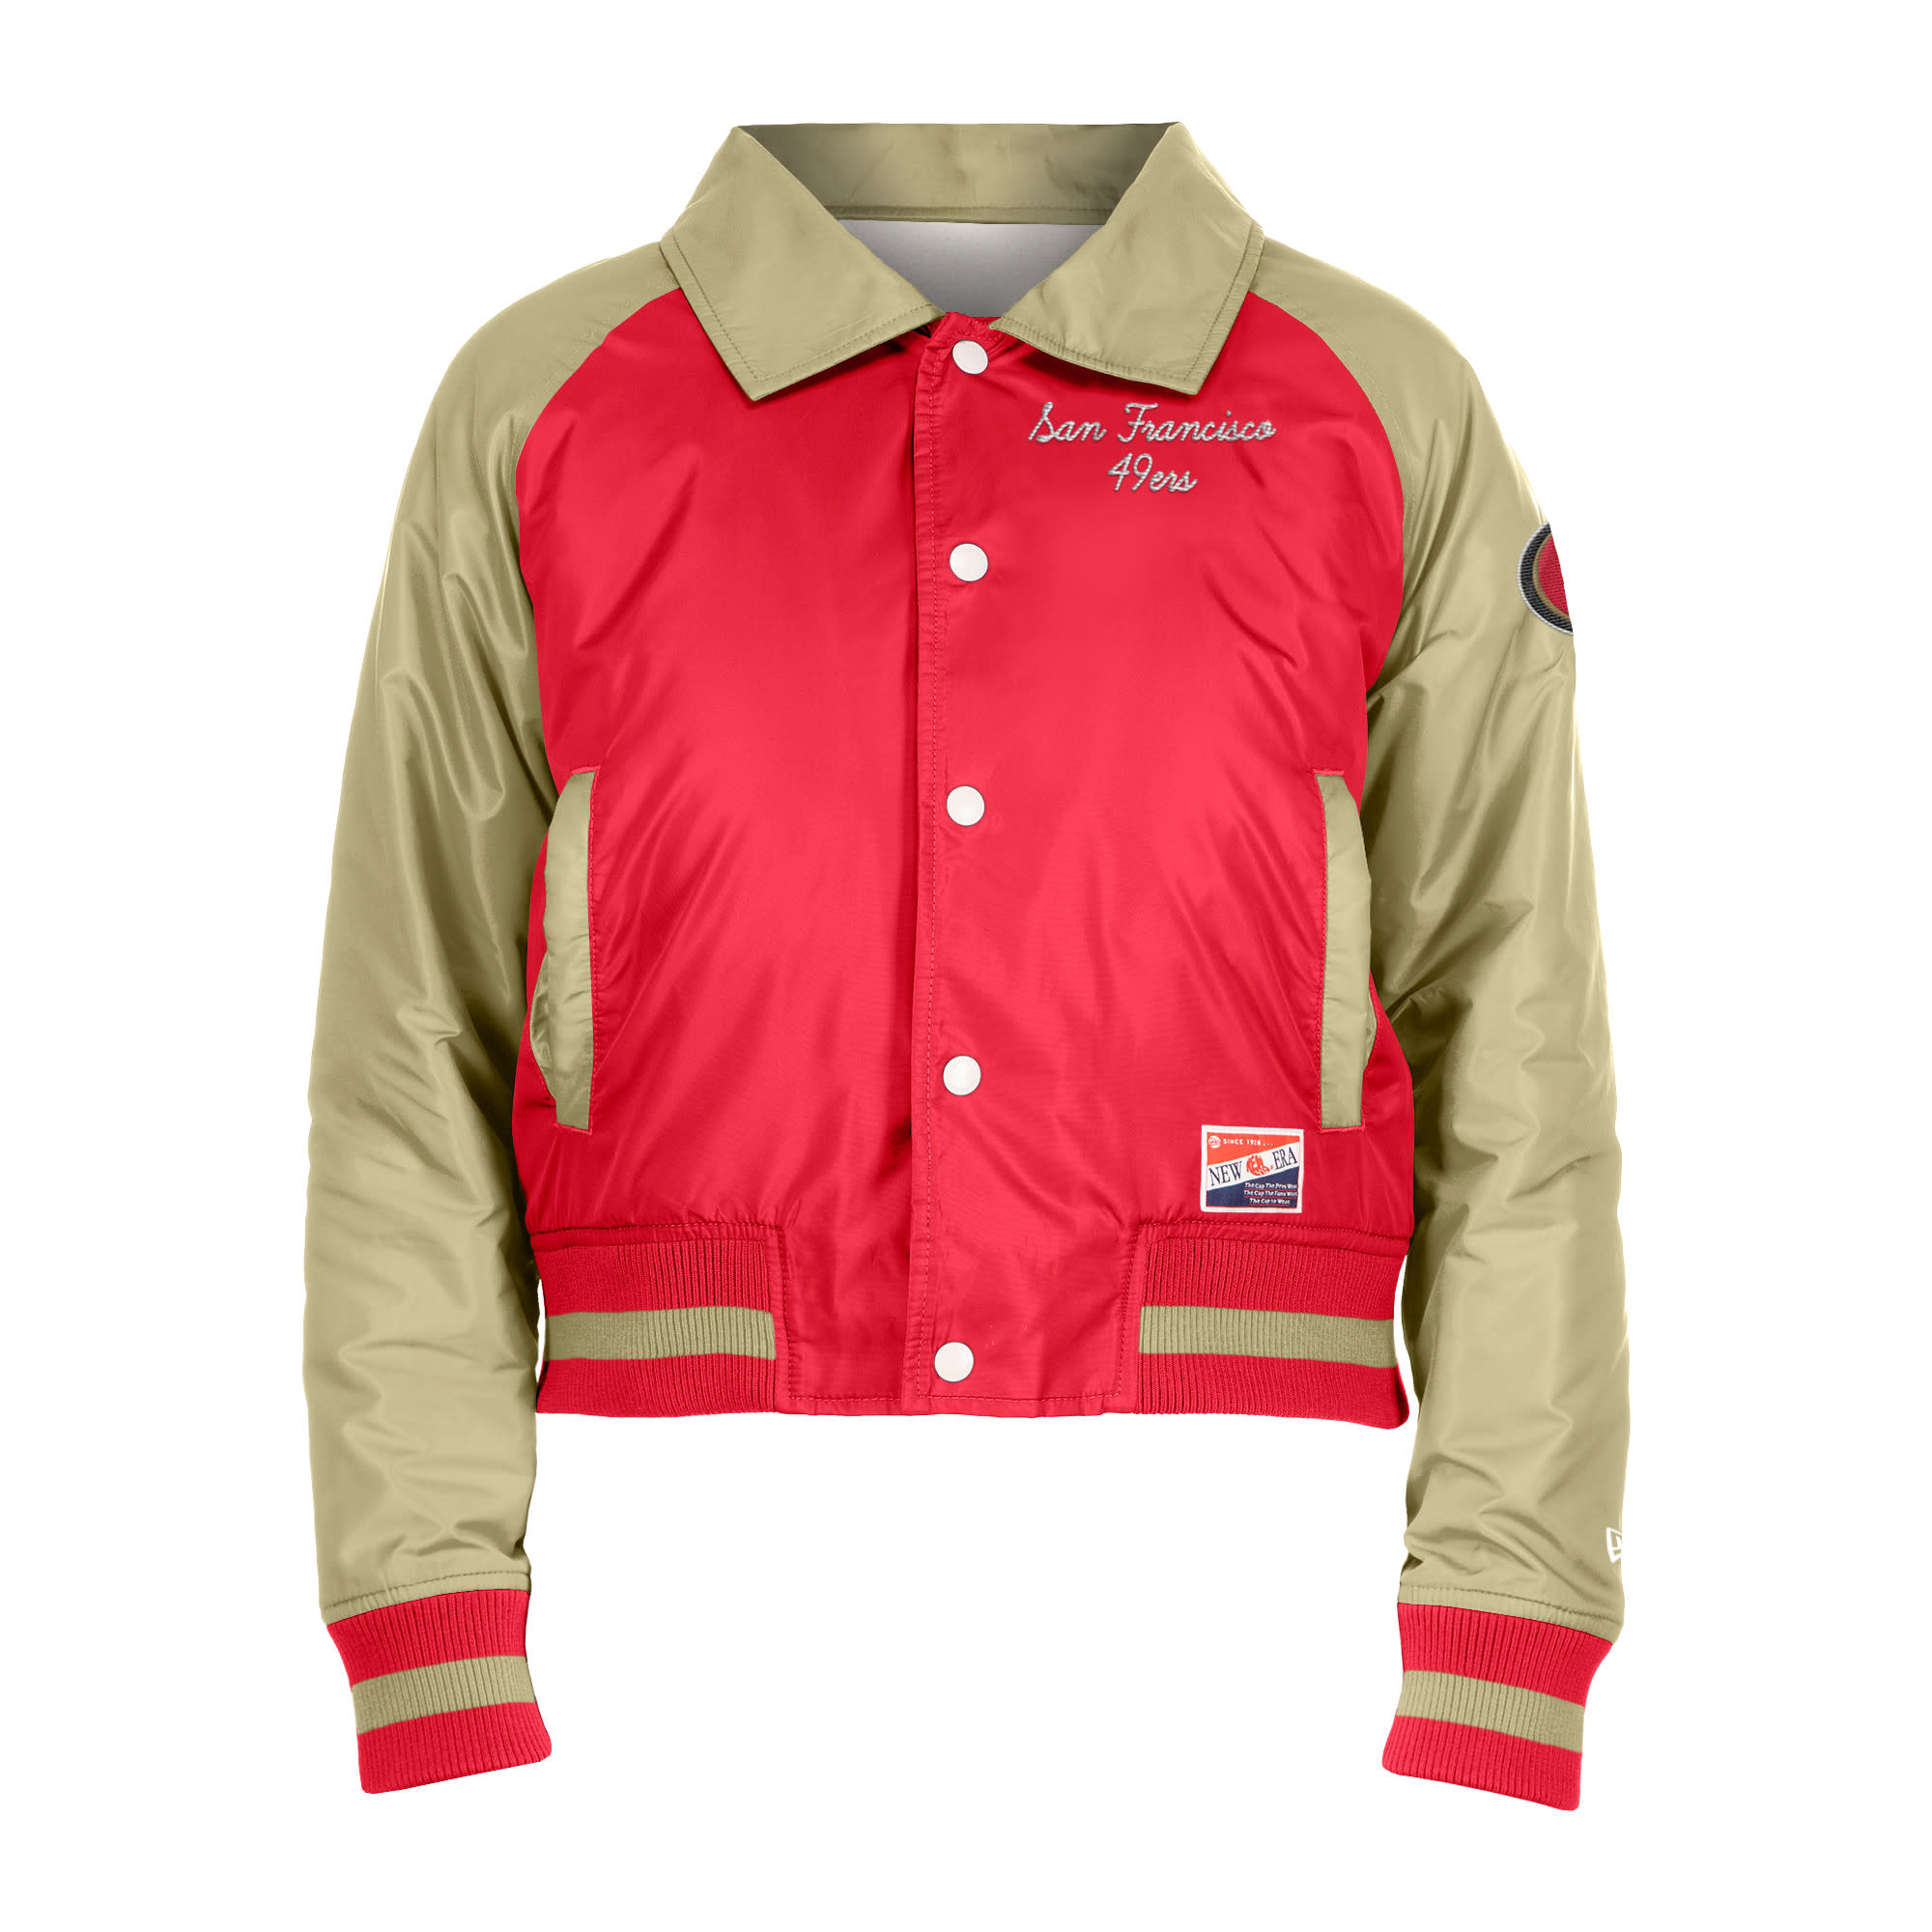 49ers Women's NE Red/Gold Button Snap Jacket